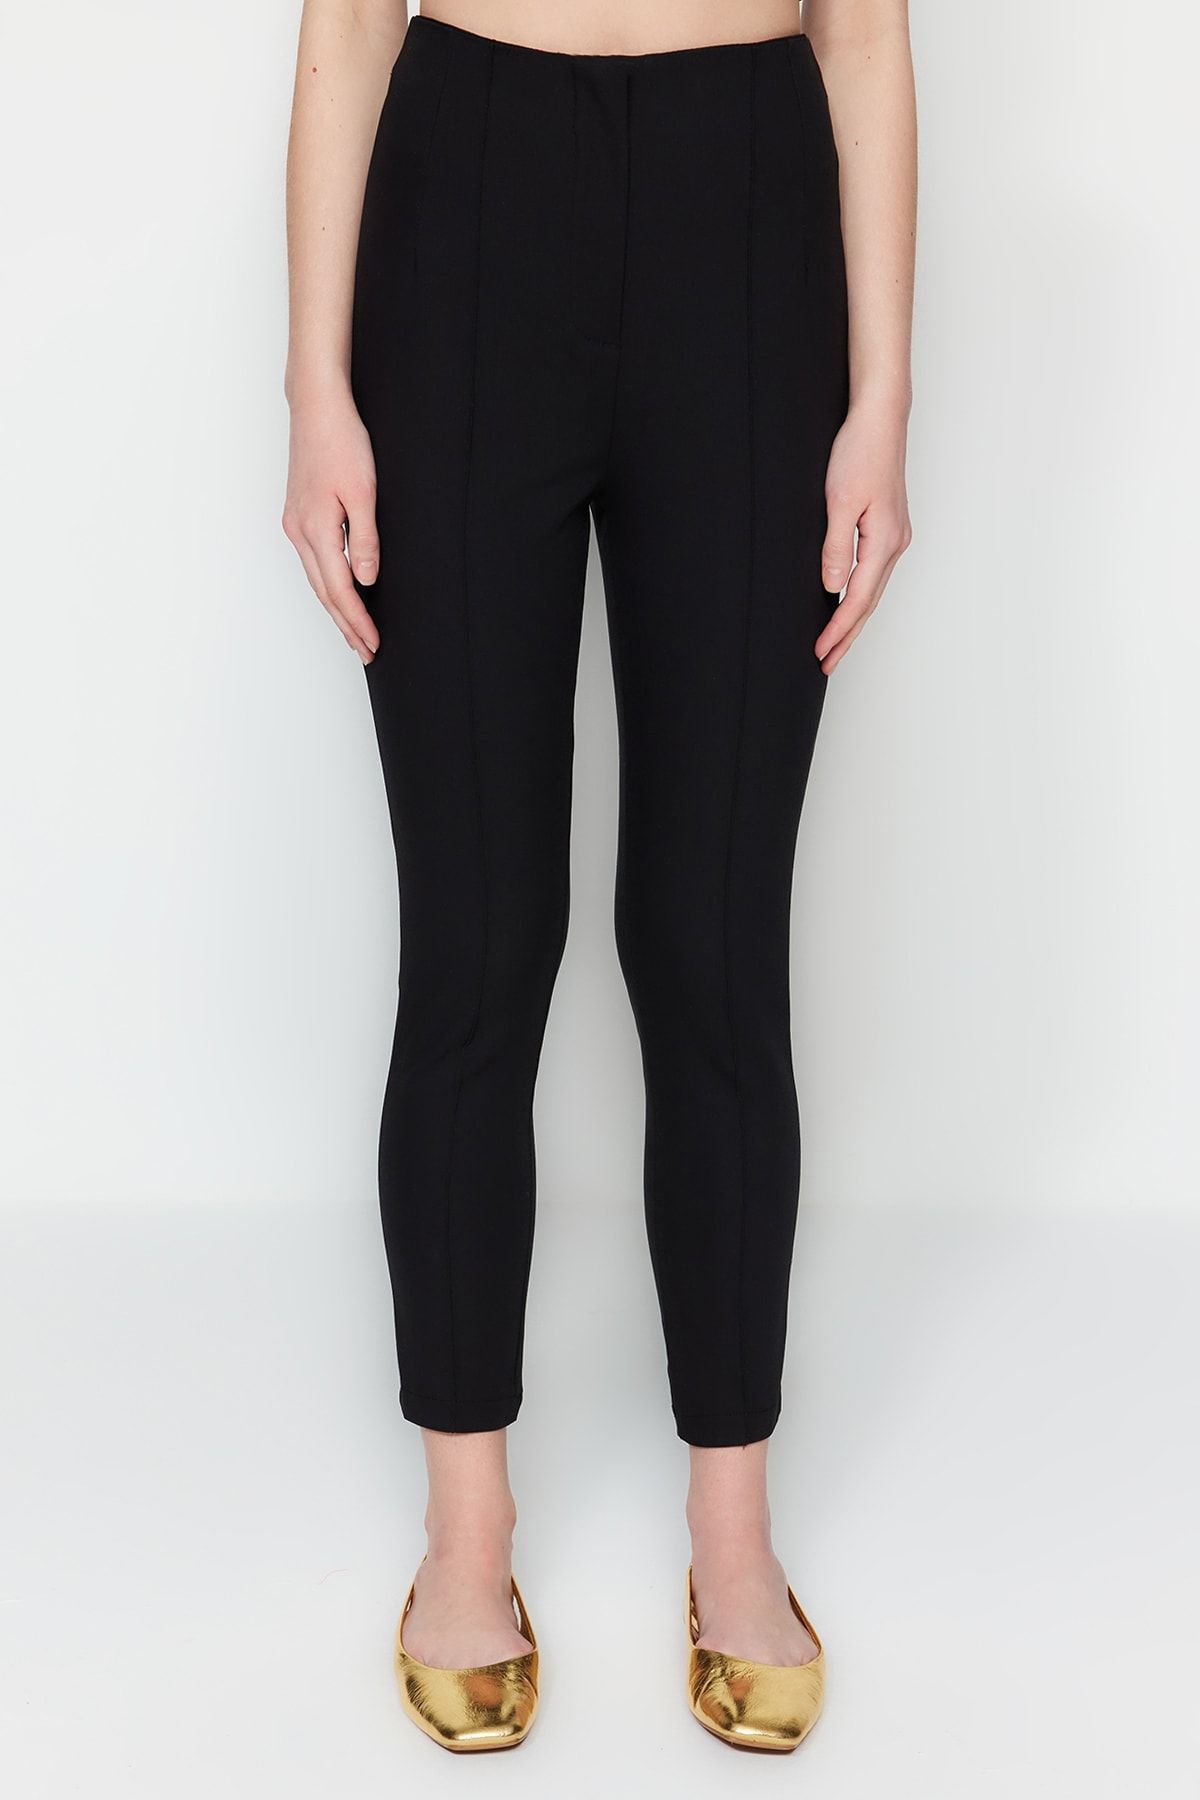 Womens Balenciaga Cigarette Fit Dress Solid Trousers FR 38 / US 8 - S | eBay